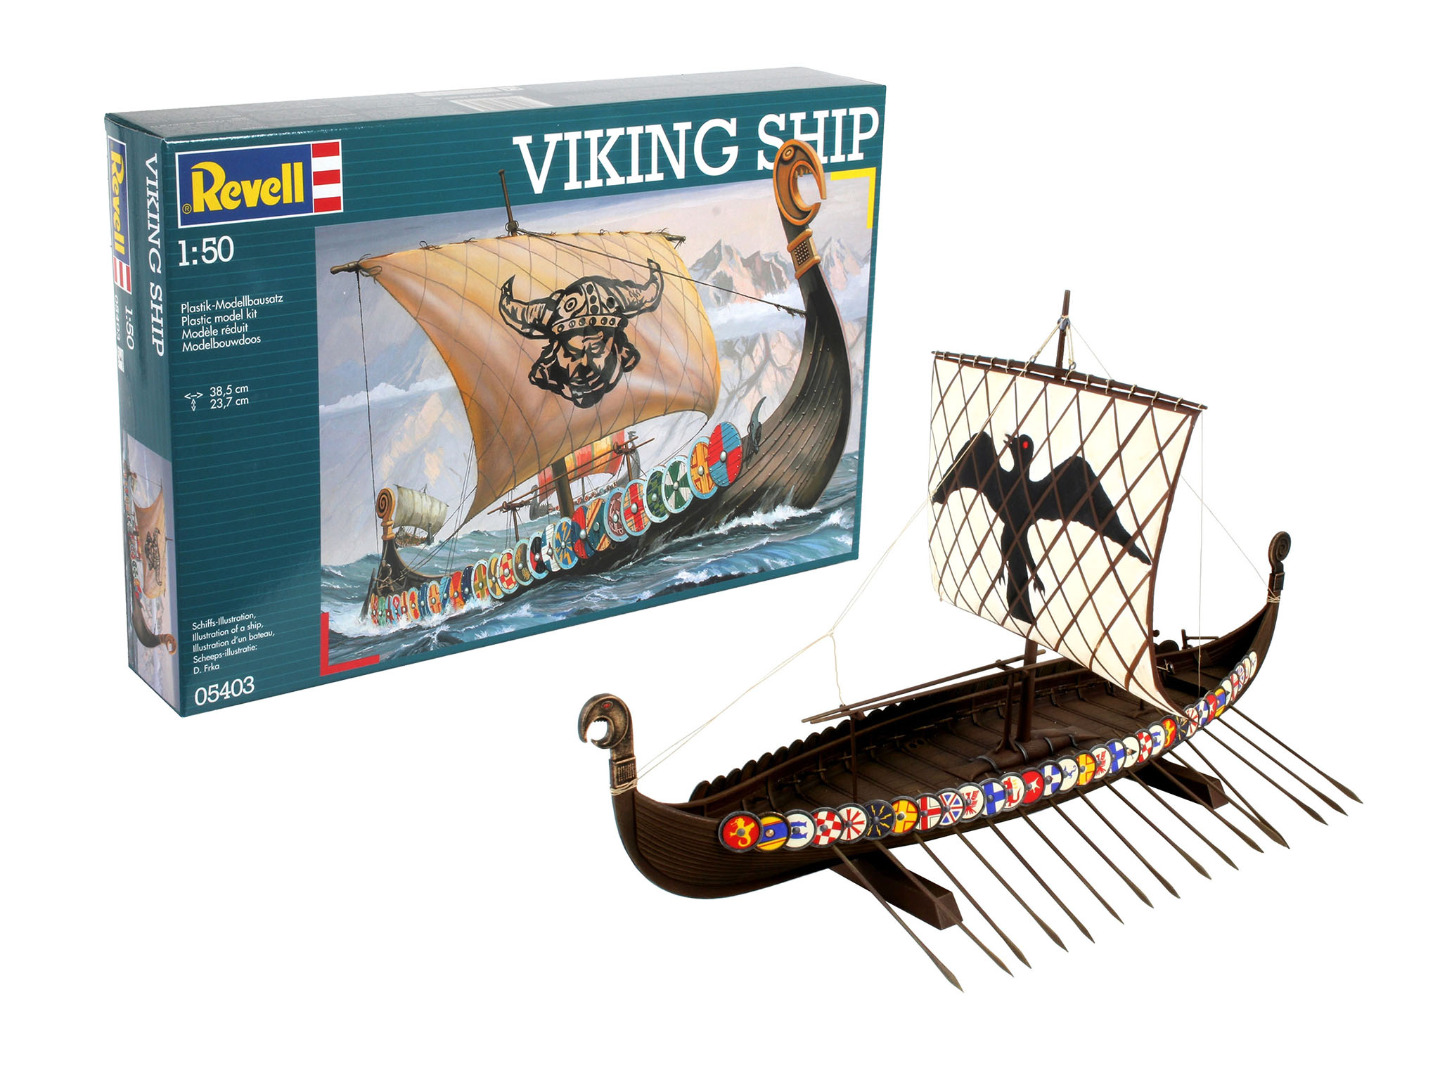 Revell Model Kit Viking Ship Scale 1:50